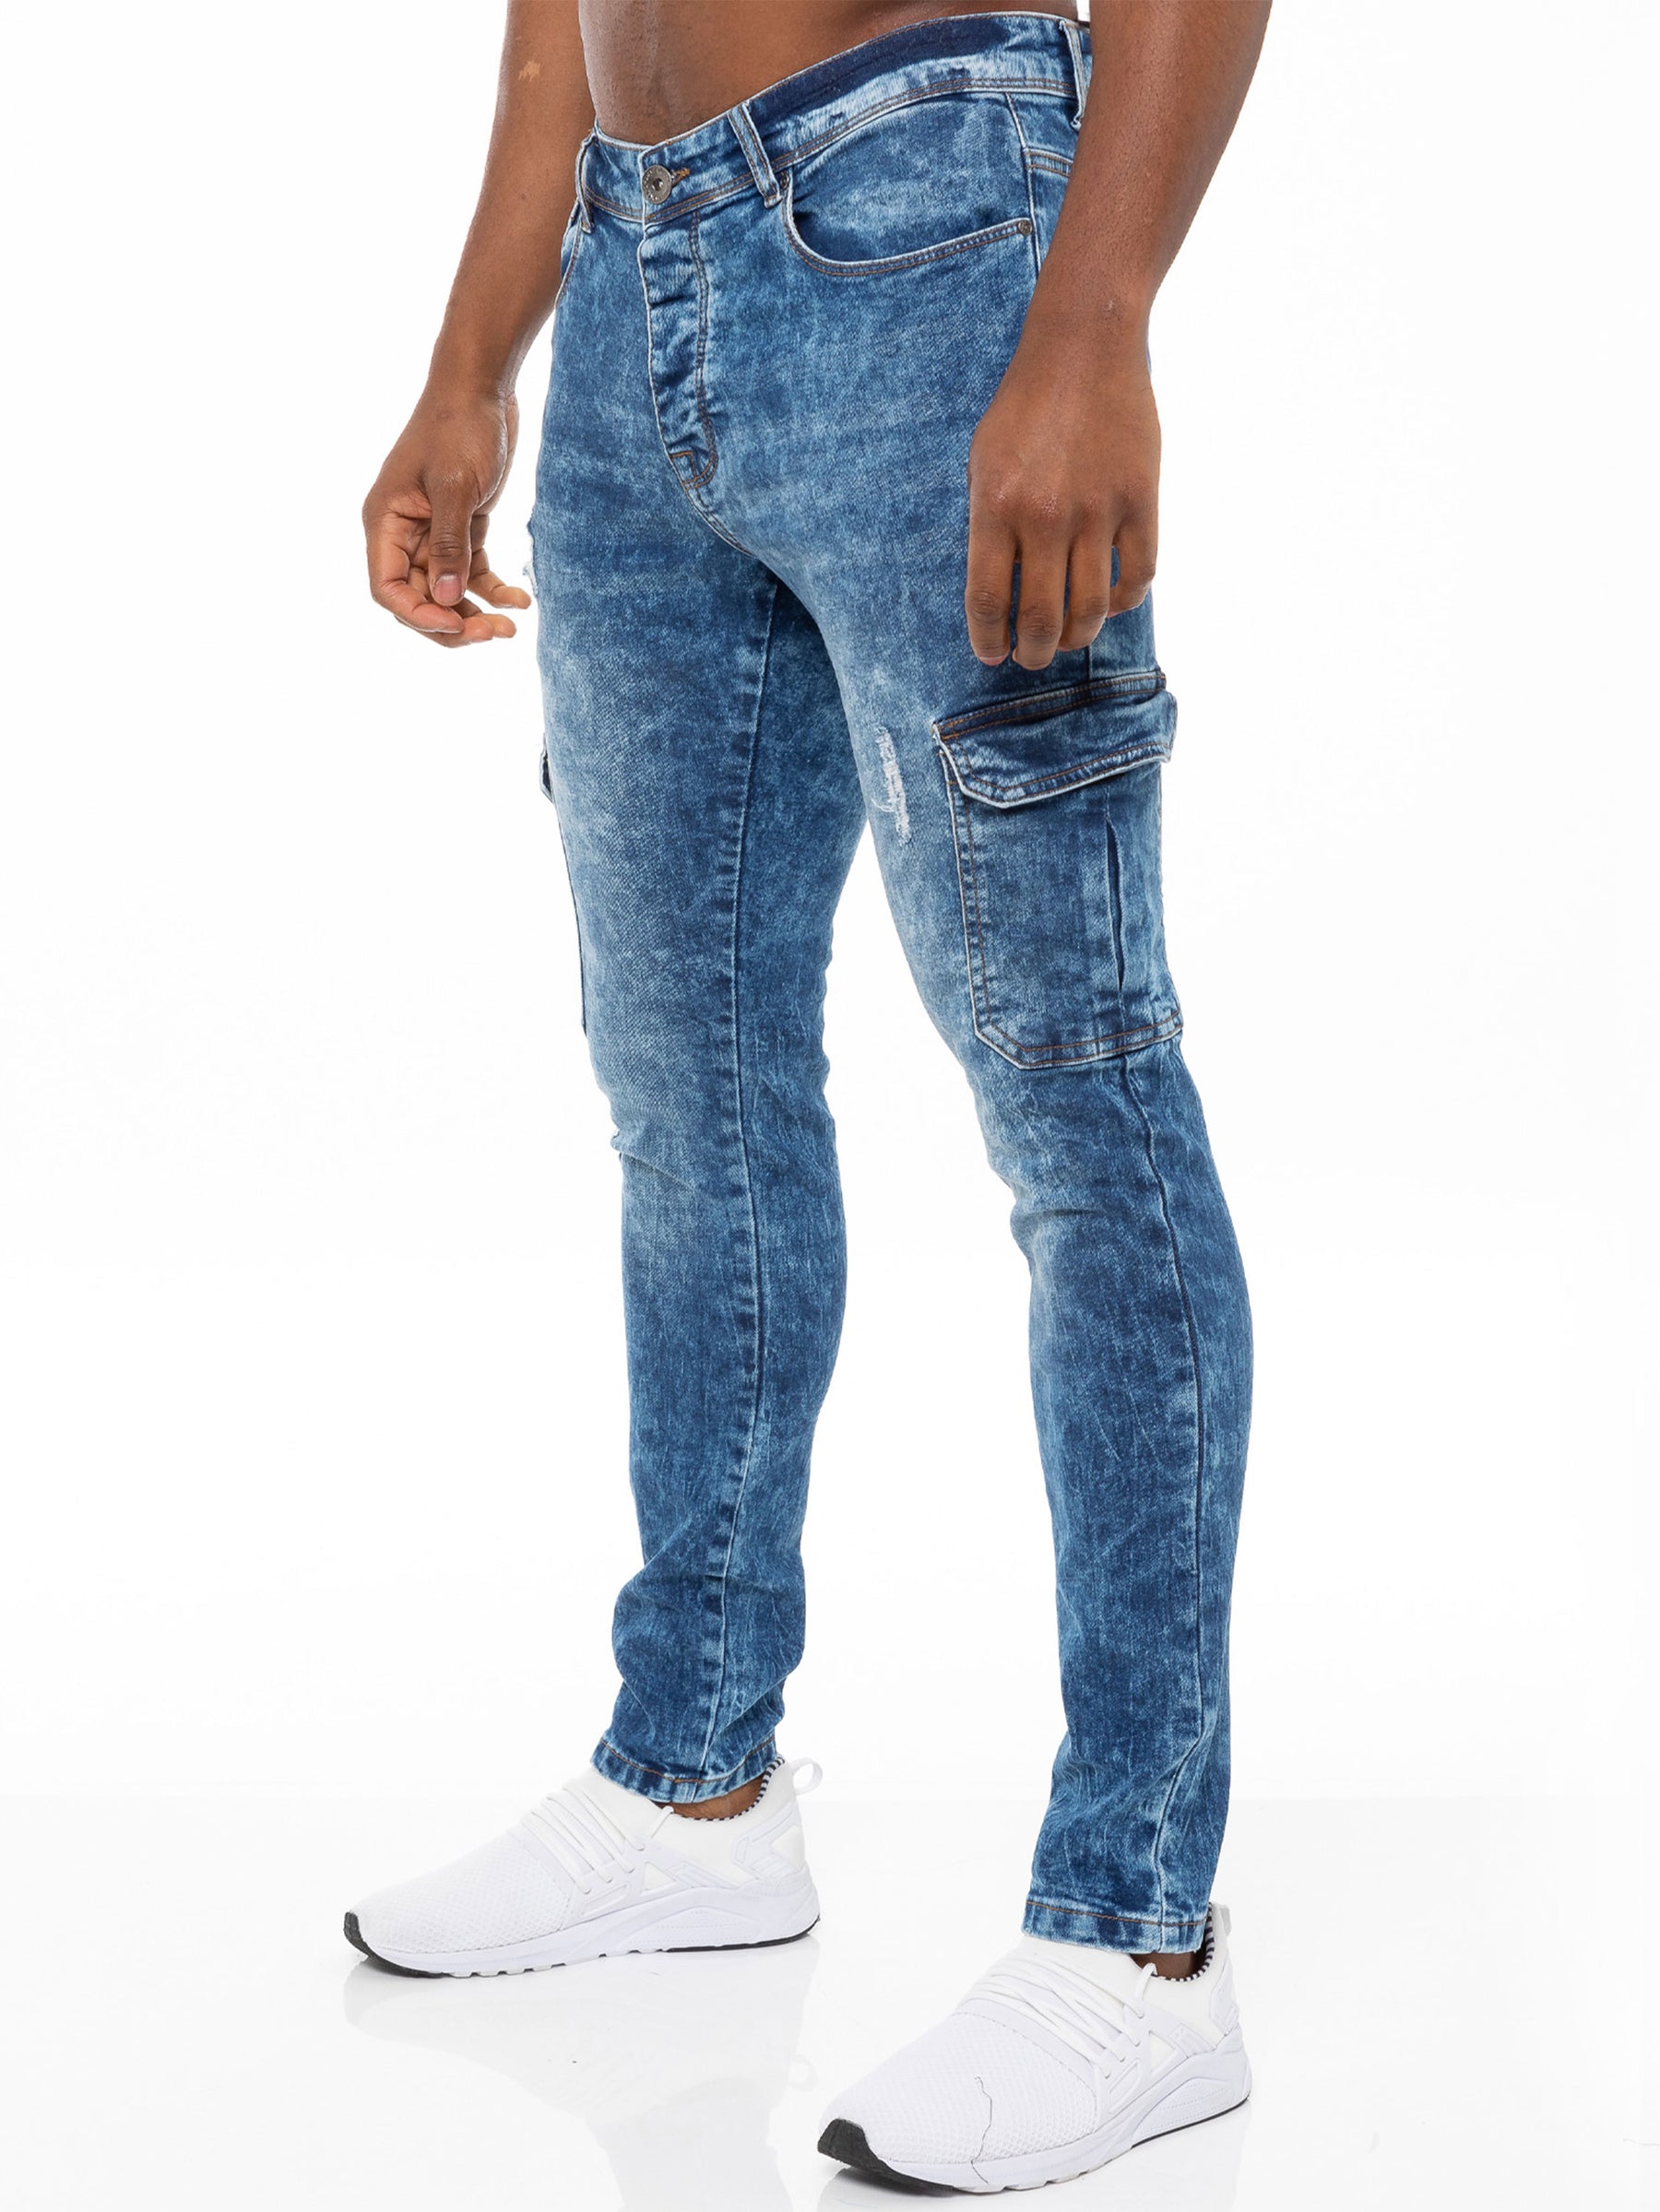 Light Blue Heavy Distressed Denim Jeans For Men (gbdnm5013), नीली डेनिम  जींस, ब्लू डेनिम जीन - Olive Attires Private Limited, Kannur | ID:  24819840473